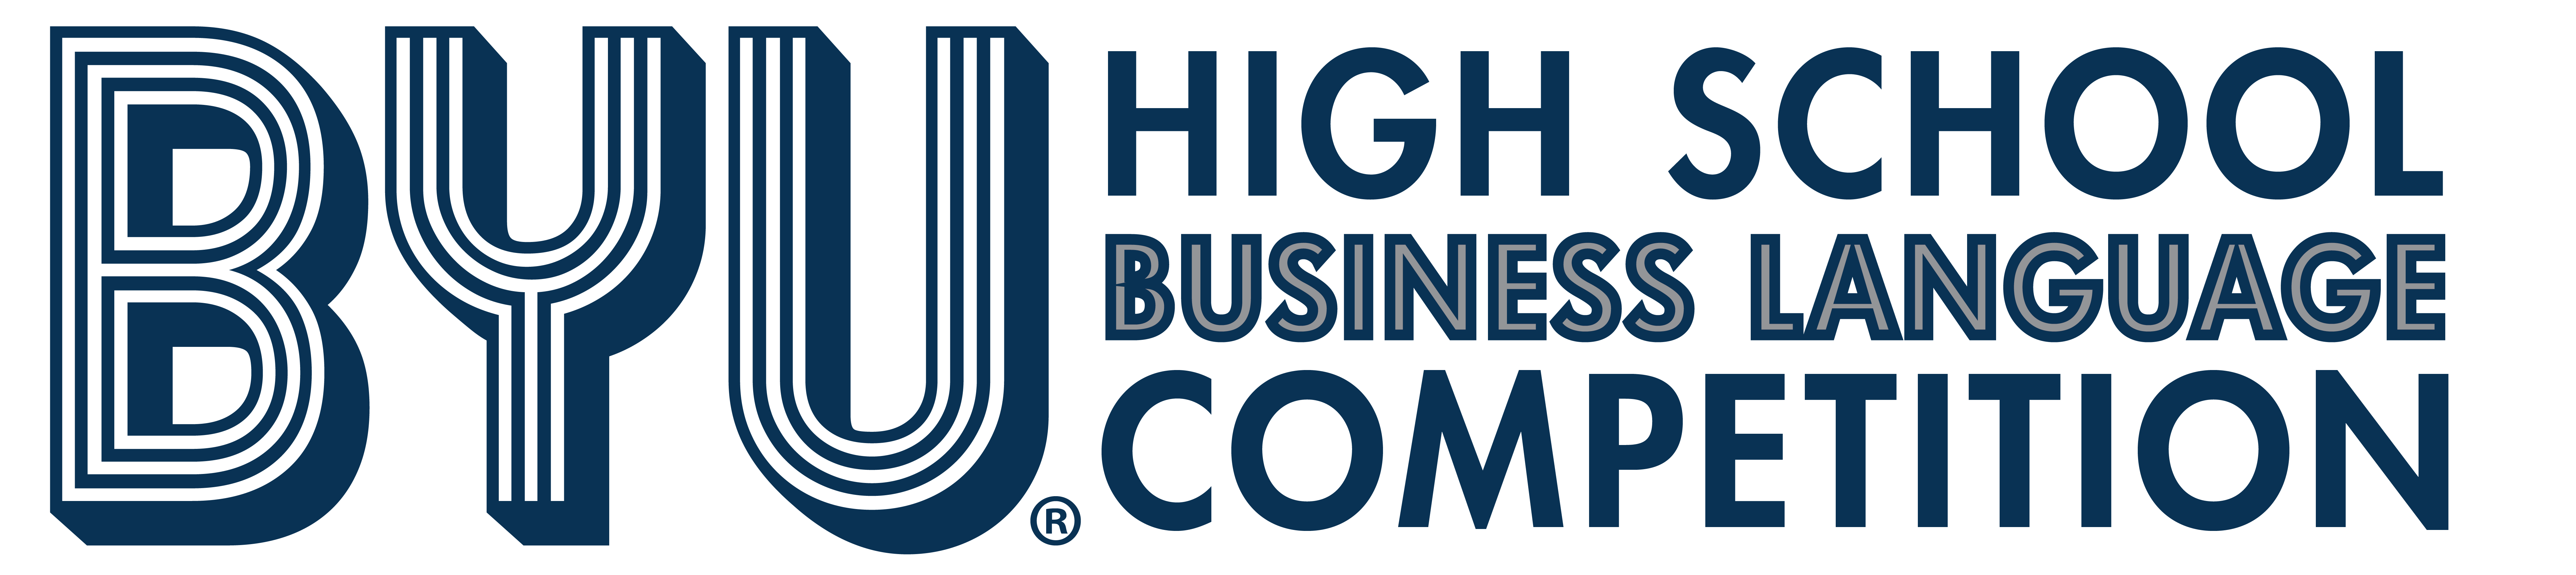 High school business programs